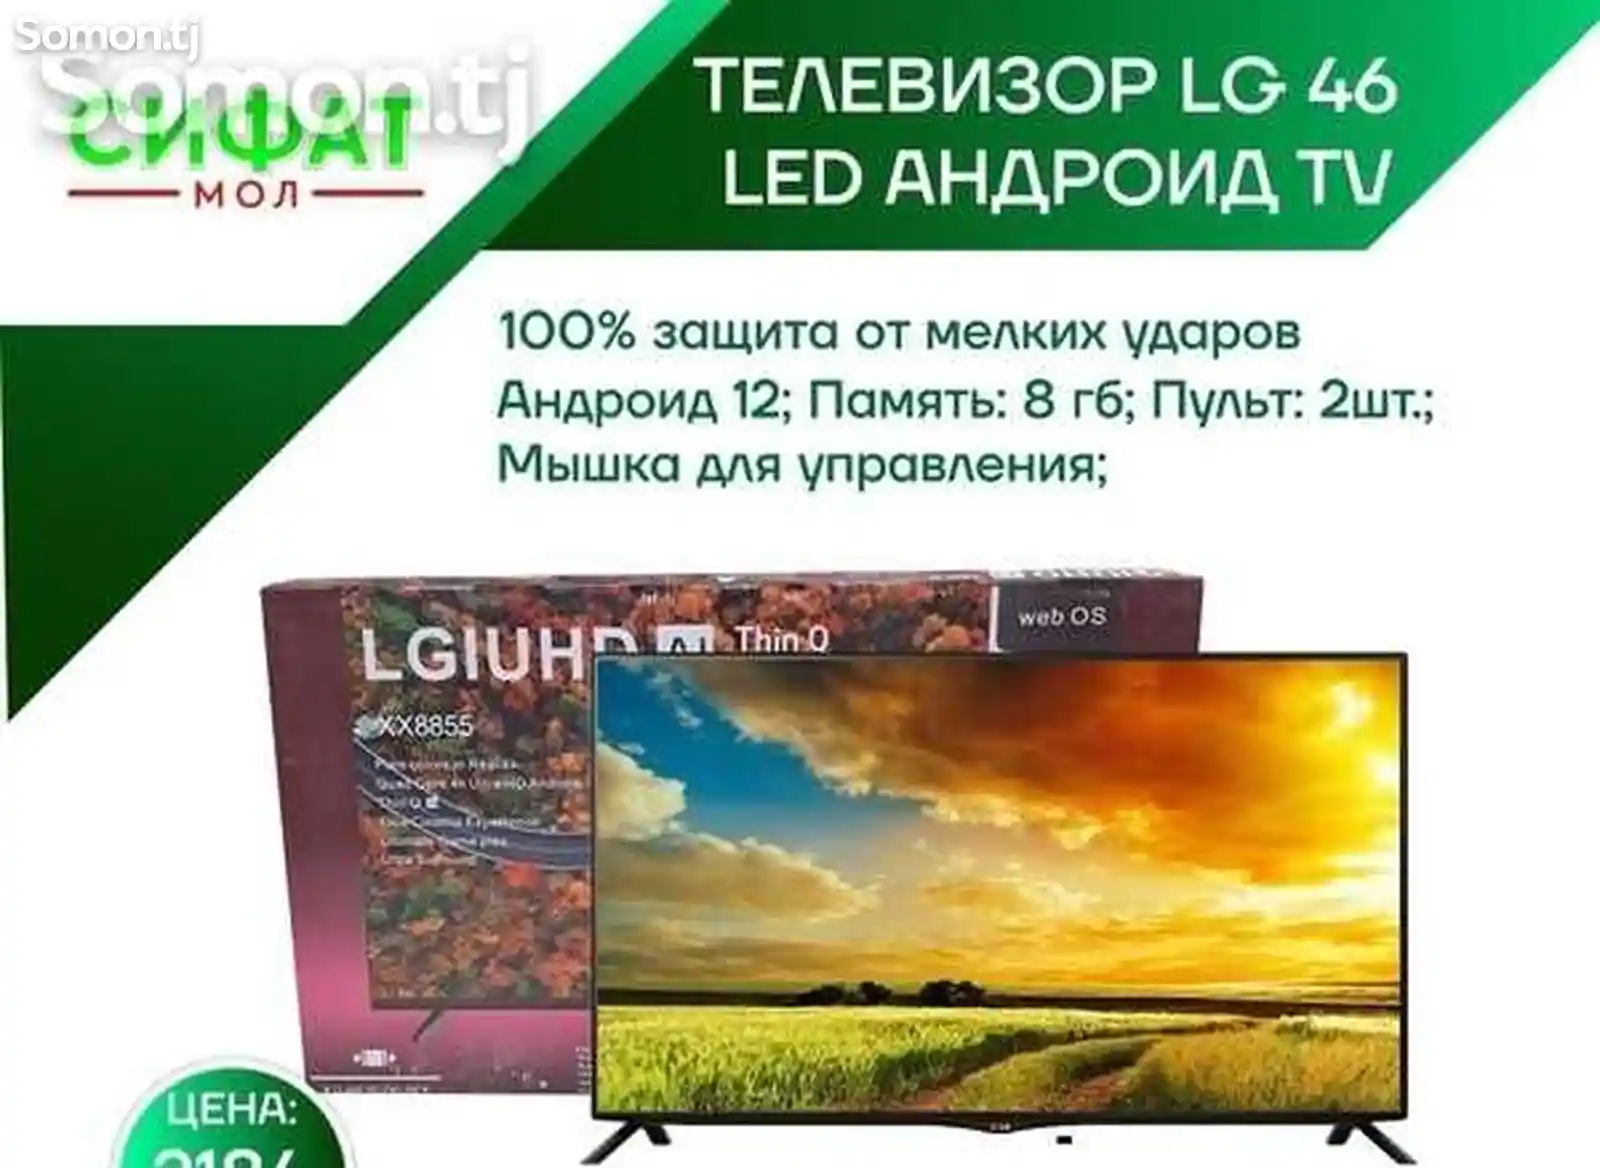 Телевизор LG 46 LED Android TV-1